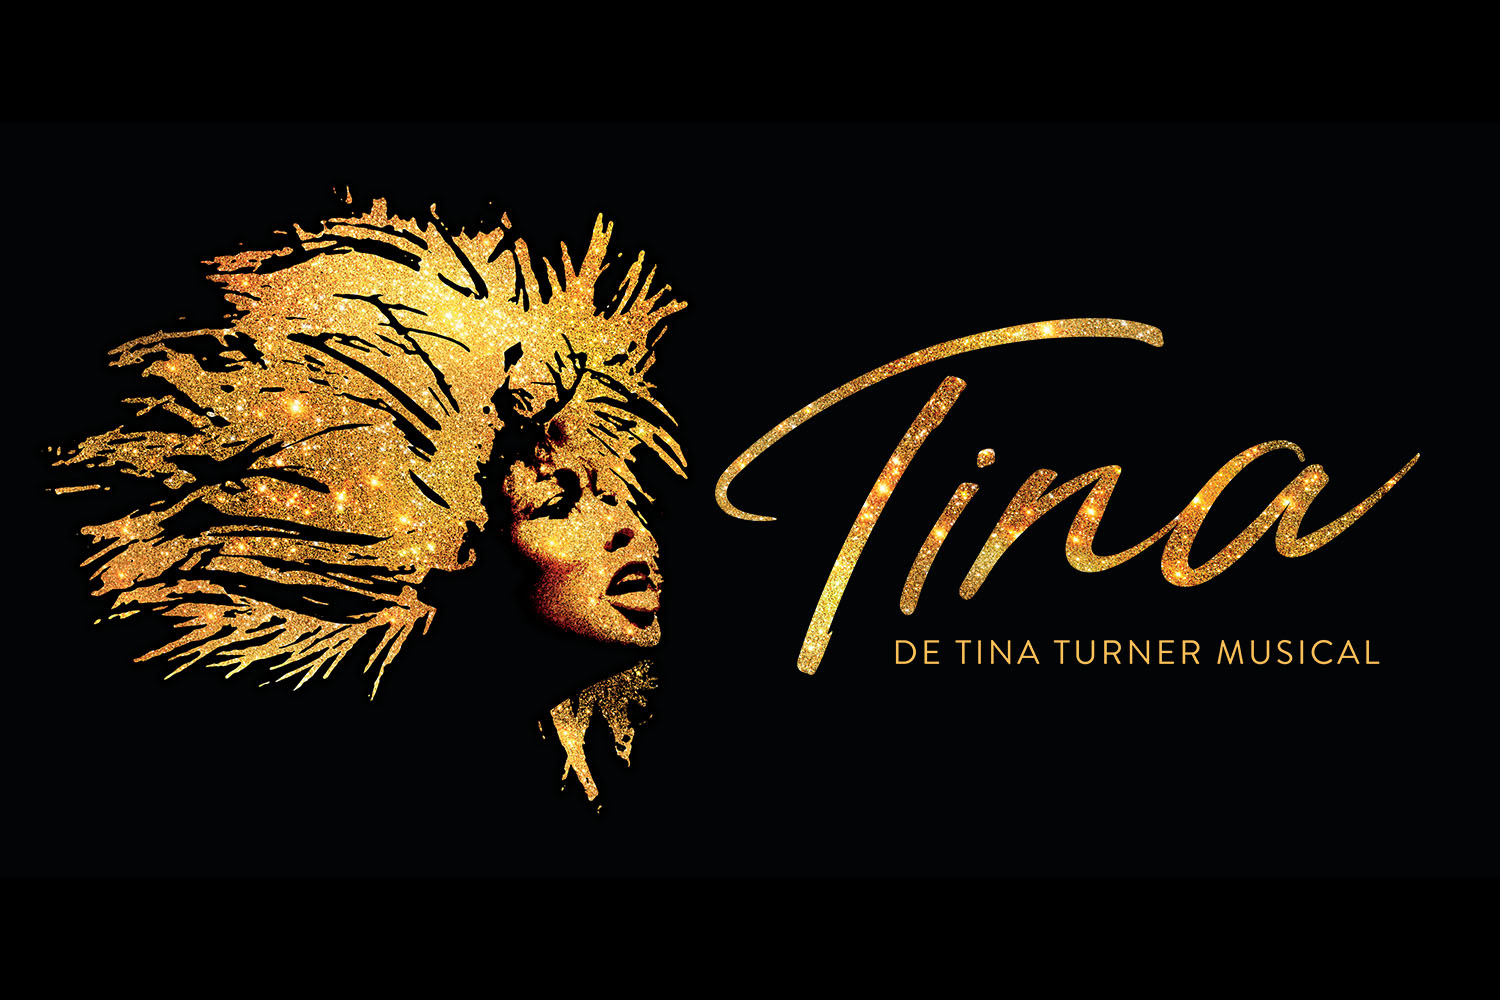 Tina turner tournee 2019